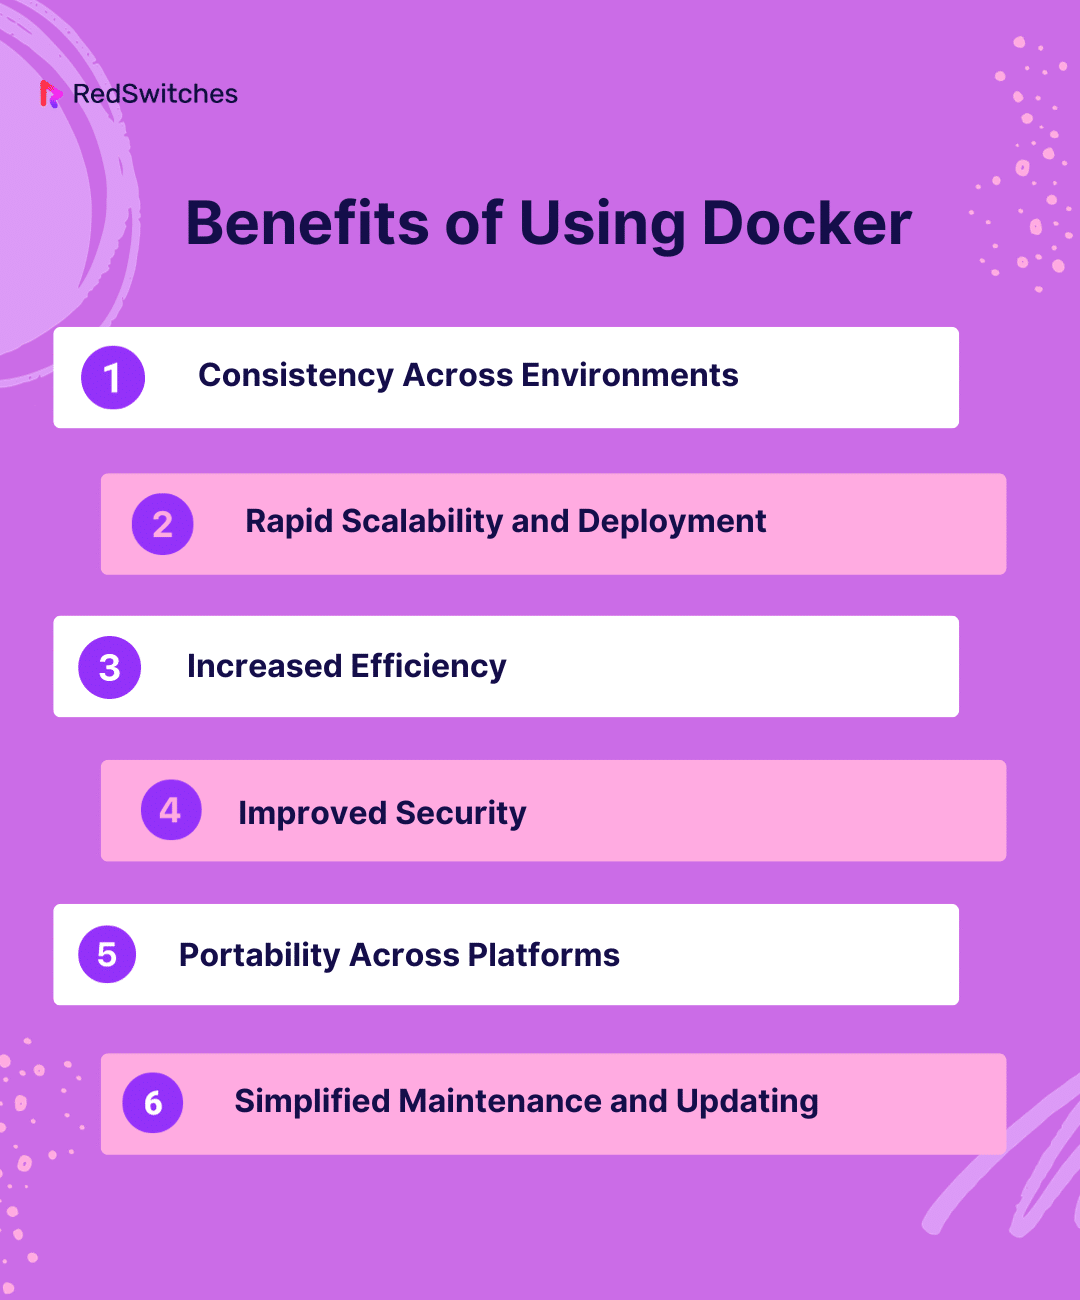 Benefits of Using Docker